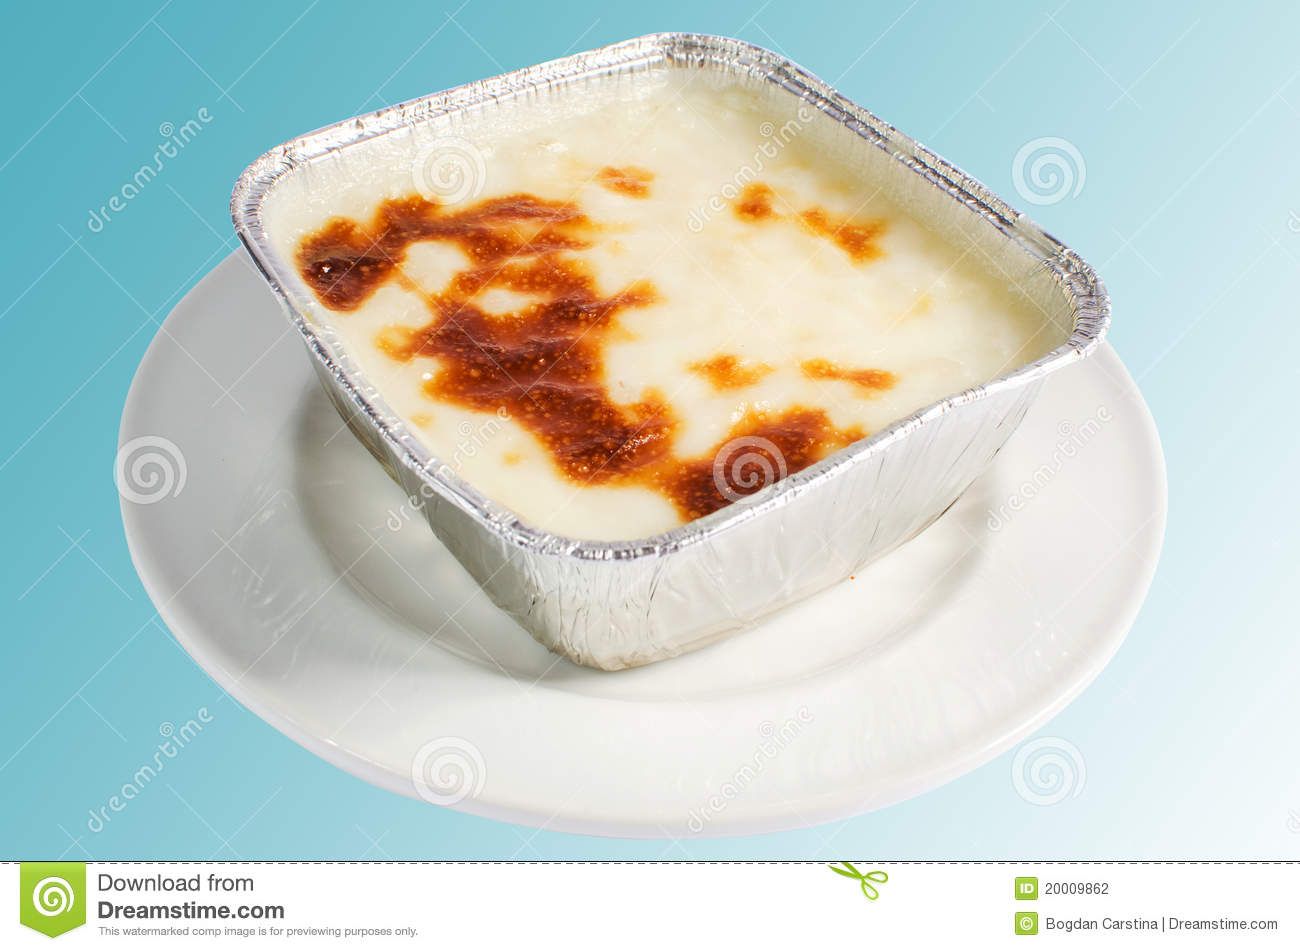 Turkish Food   Rice Pudding Stock Photography   Image  20009862